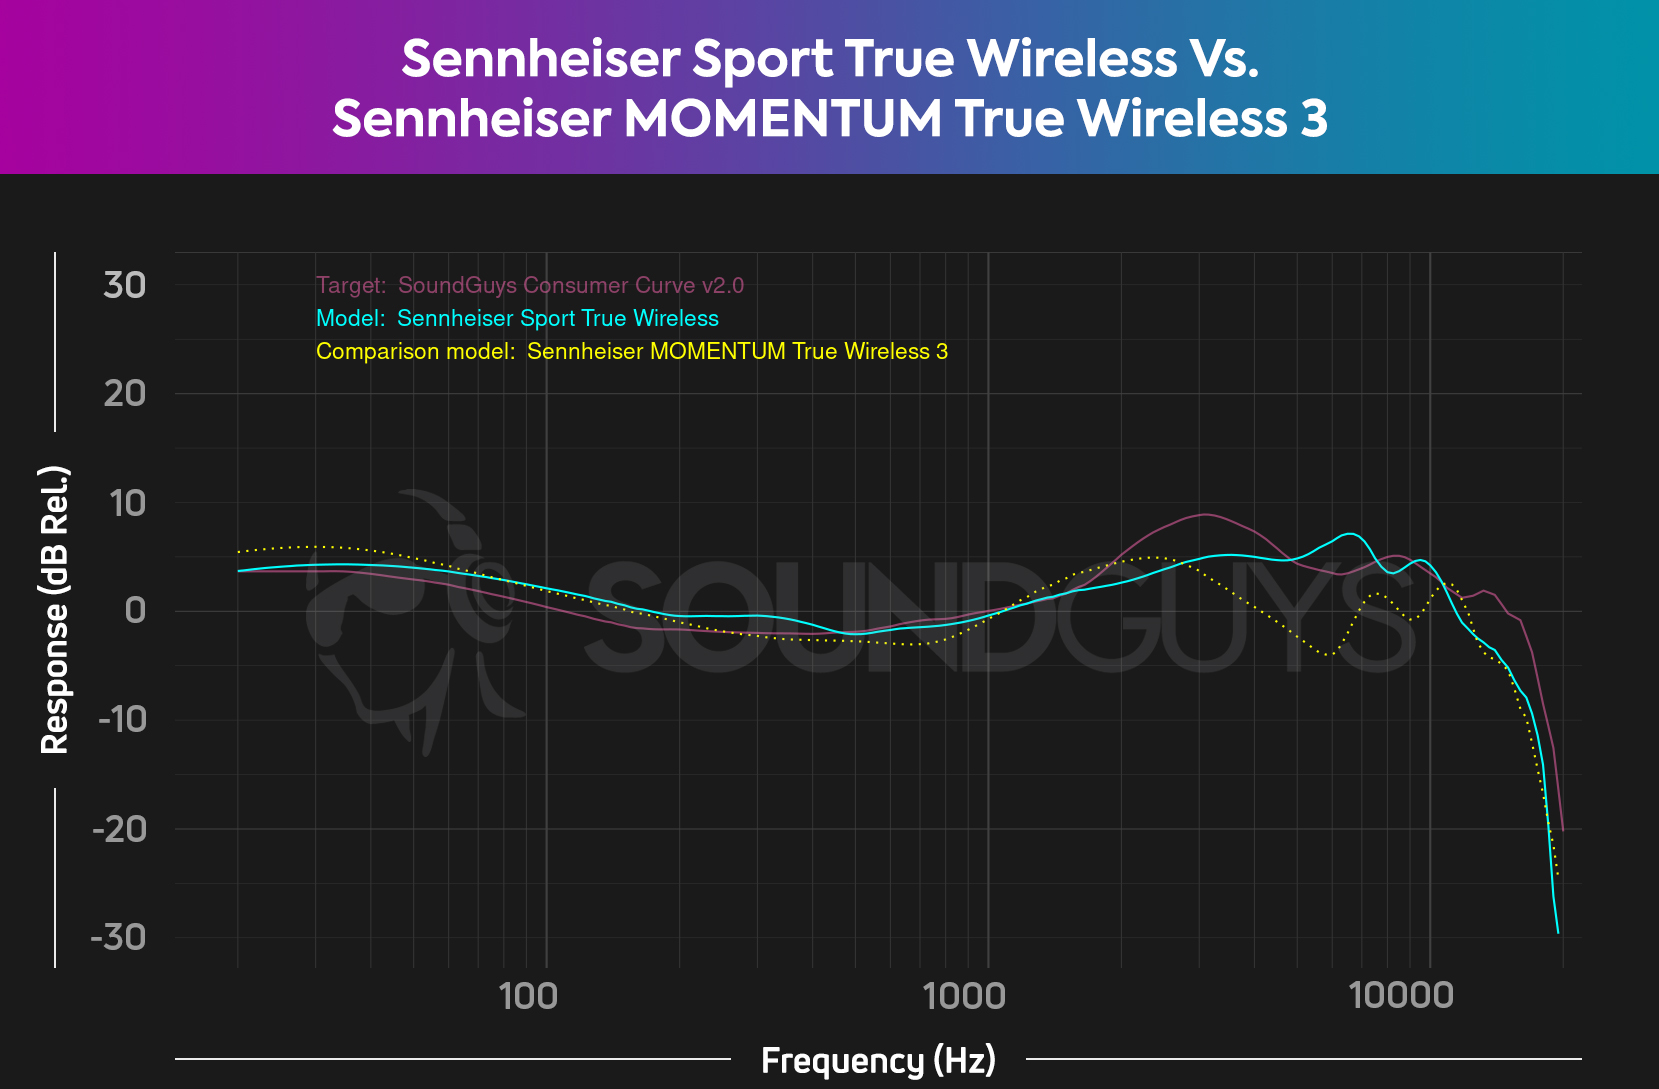 A frequency response chart comparing the Sennheiser Sport True Wireless and the Sennheiser MOMENTUM True Wireless 3